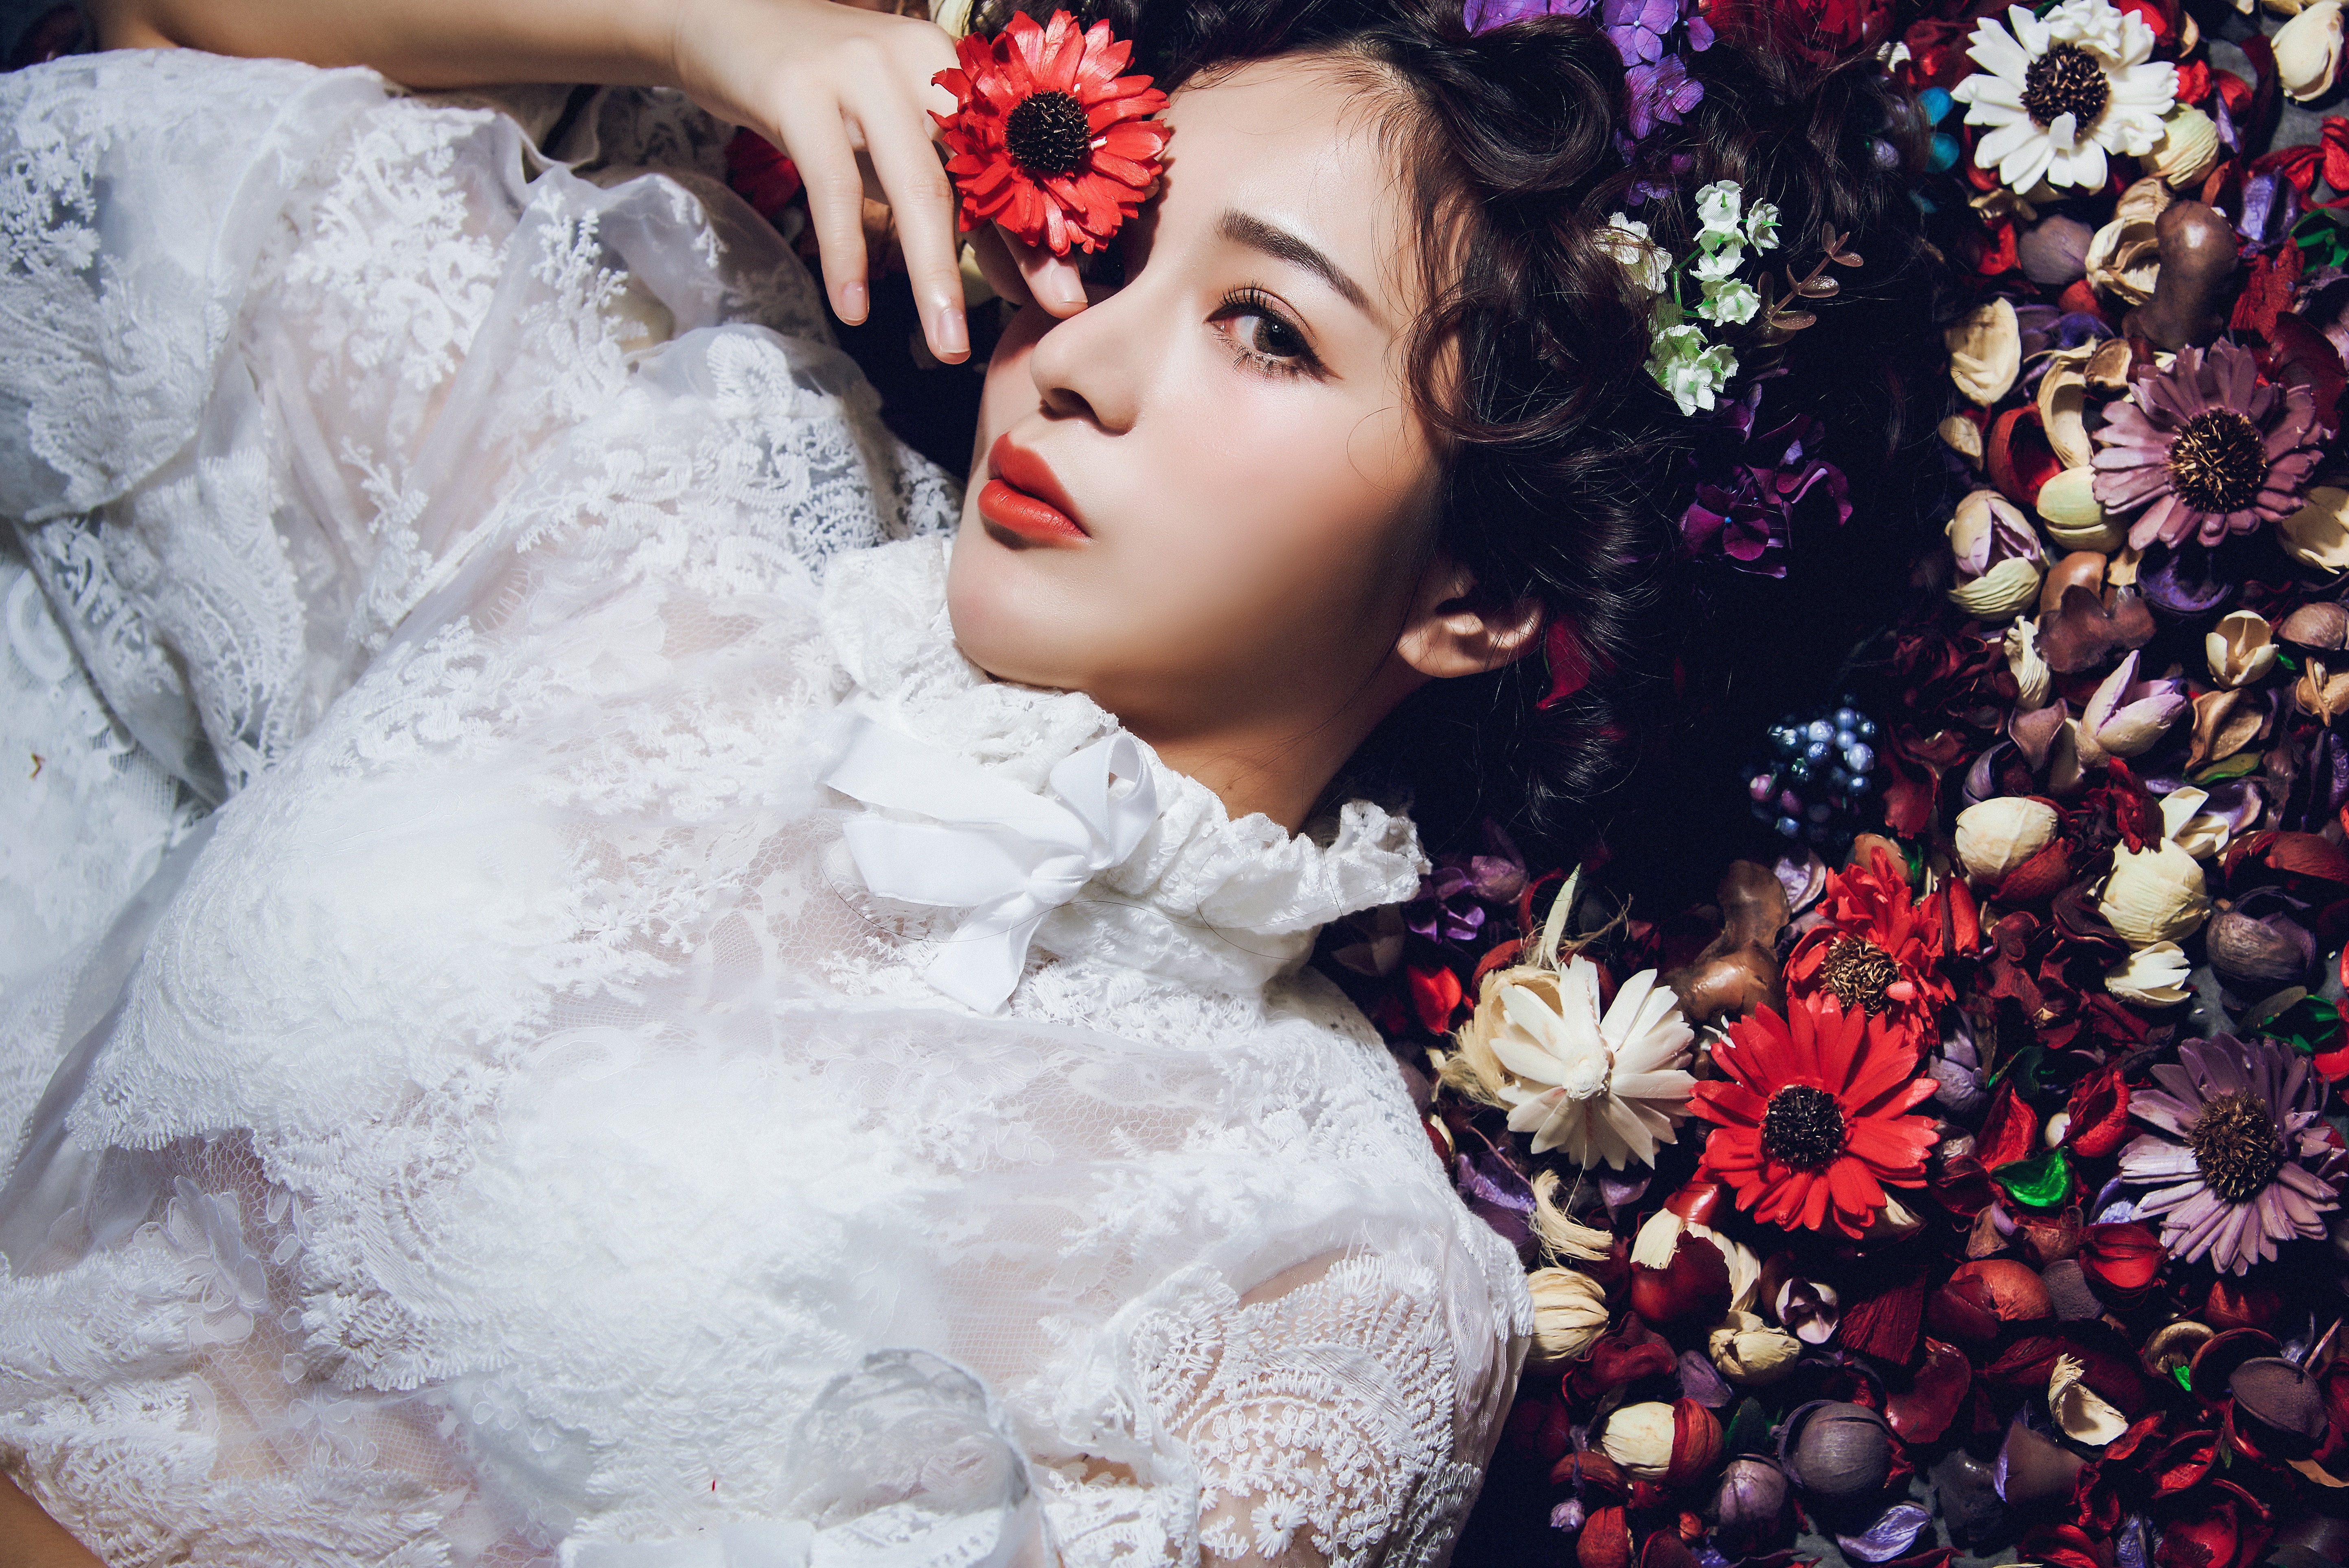 People 5770x3852 Asian women model flowers white dress red lipstick